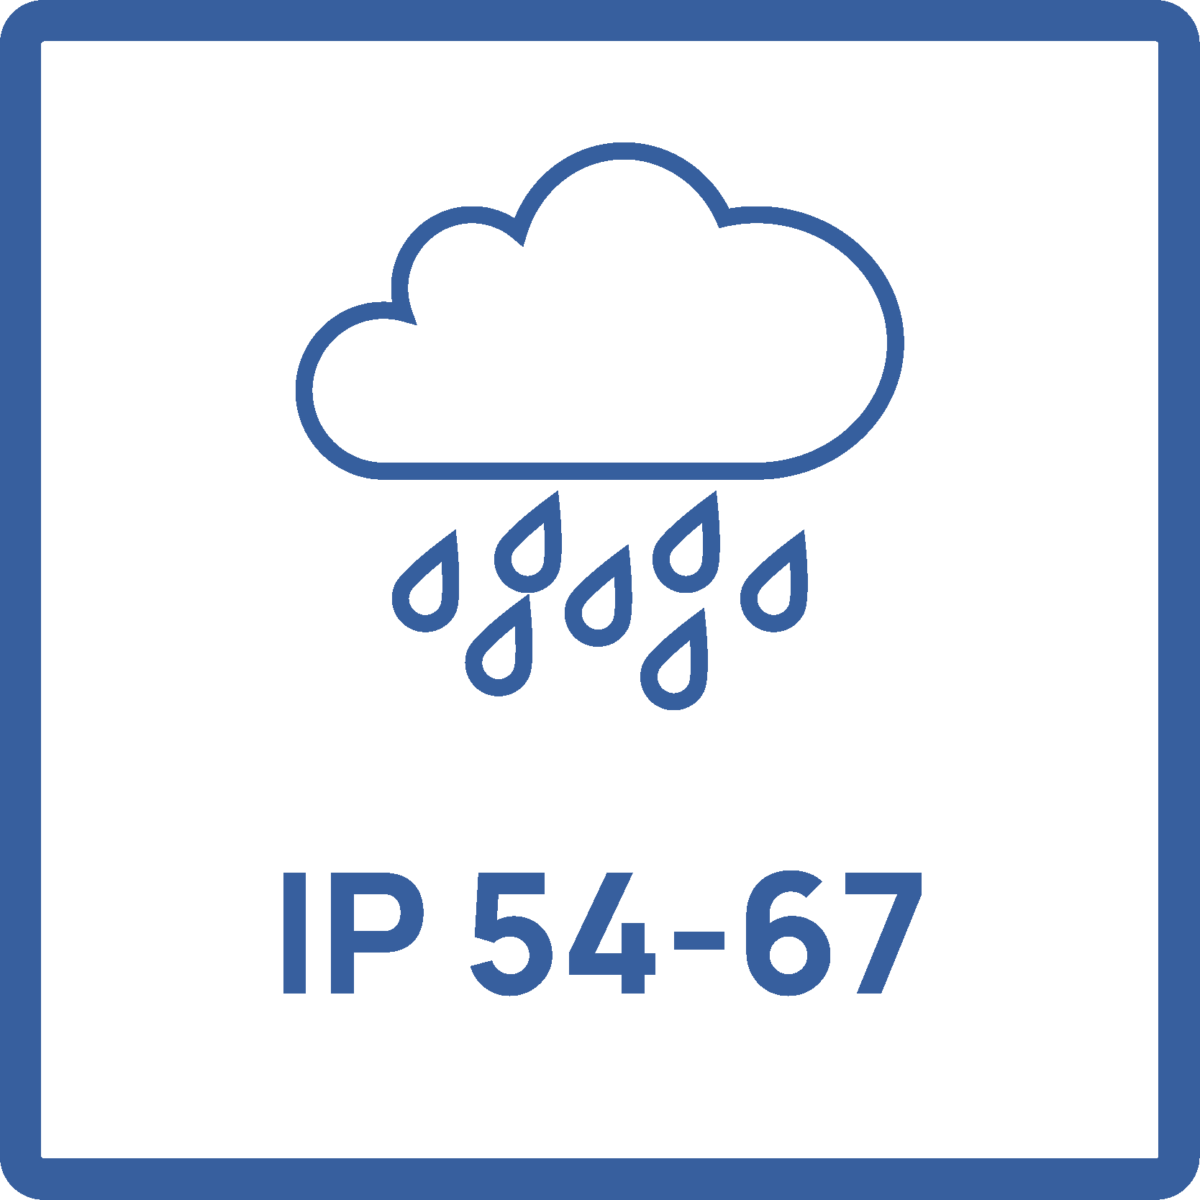 IP 54-67